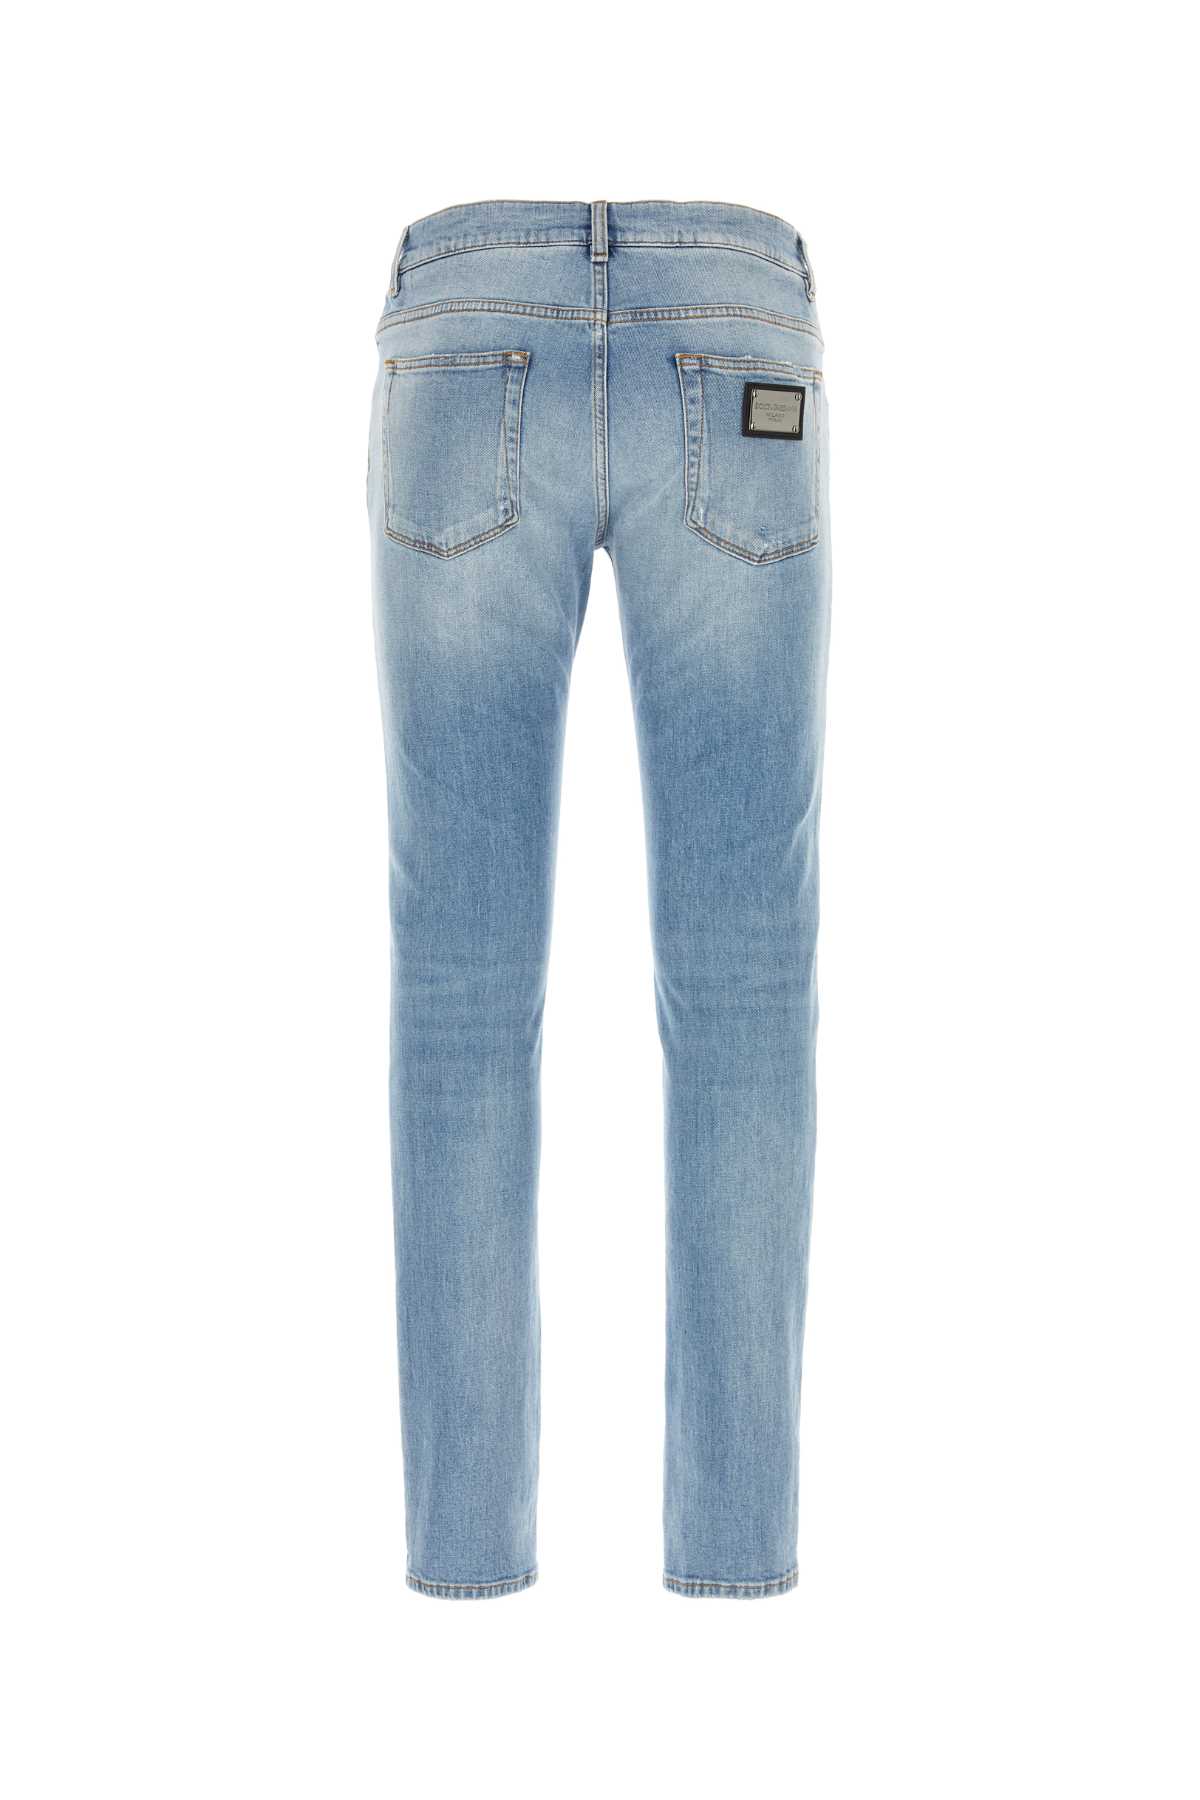 Dolce & Gabbana Stretch Denim Skinny Jeans In Varianteabbinata